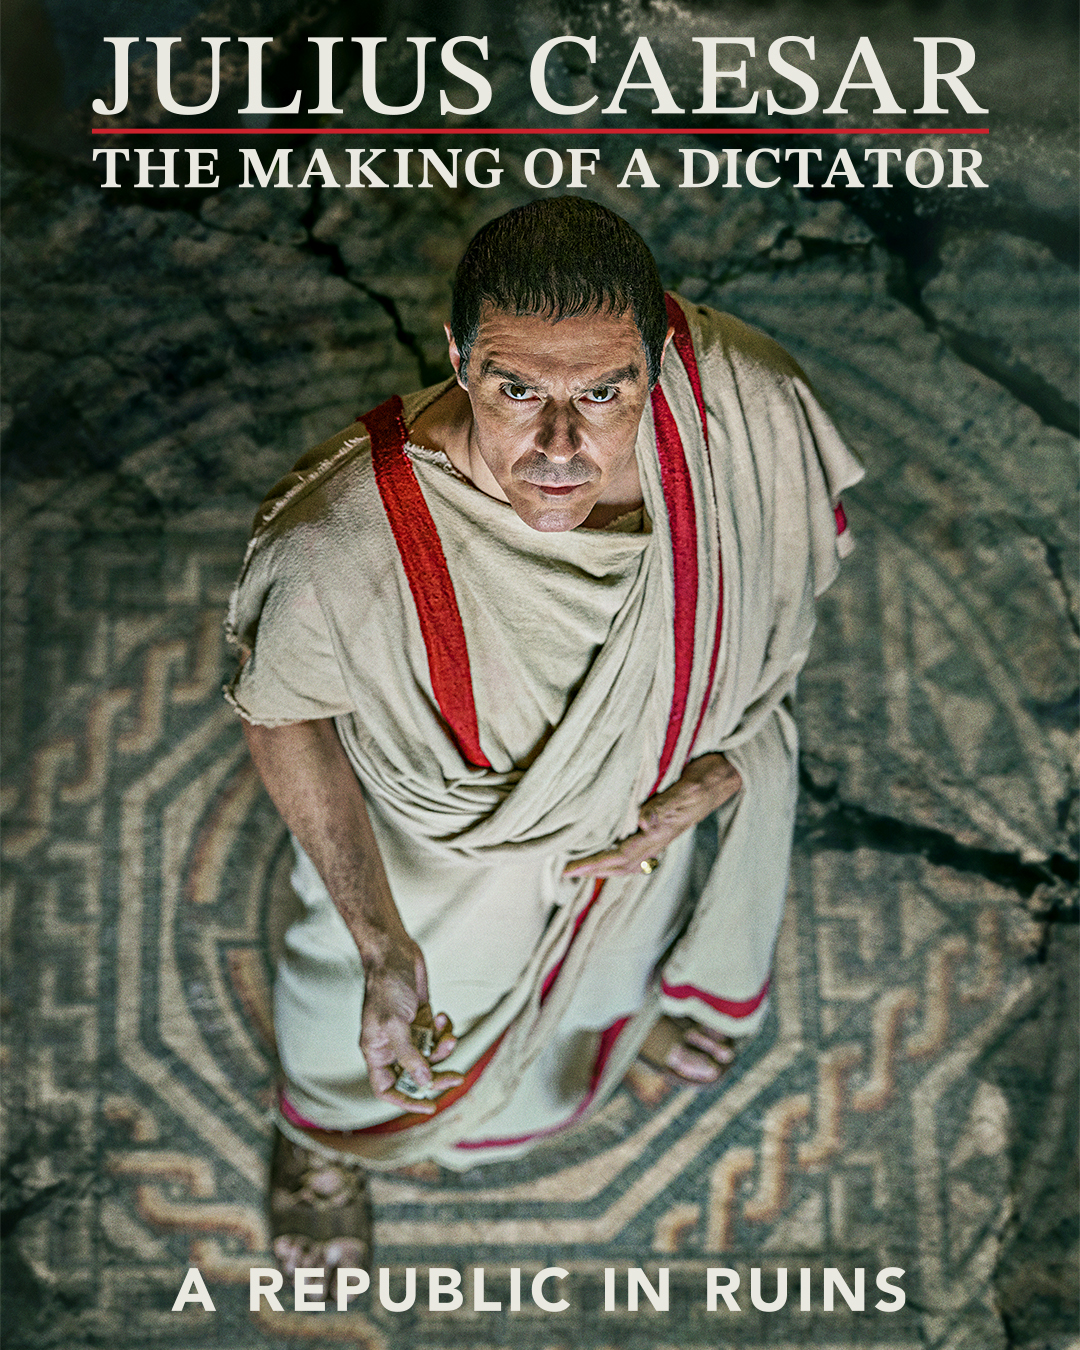  JULIUS CAESAR: THE MAKING OF A DICTATOR